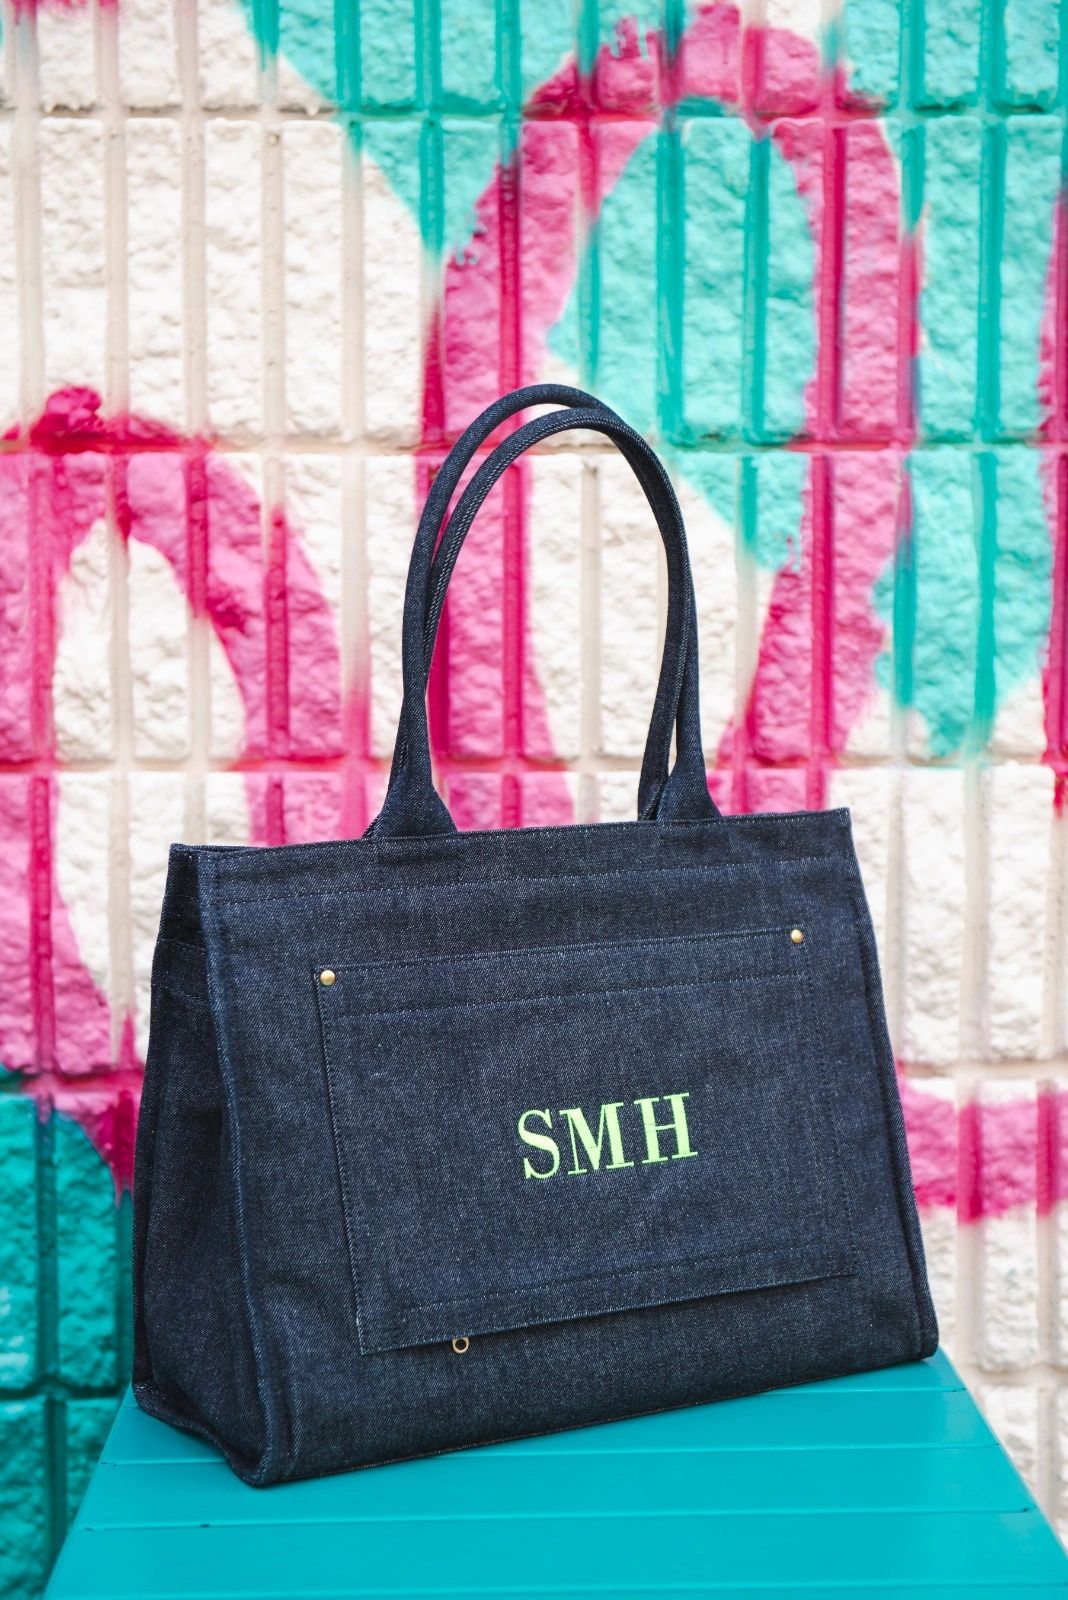 Monogrammed tote bag - initials SMH